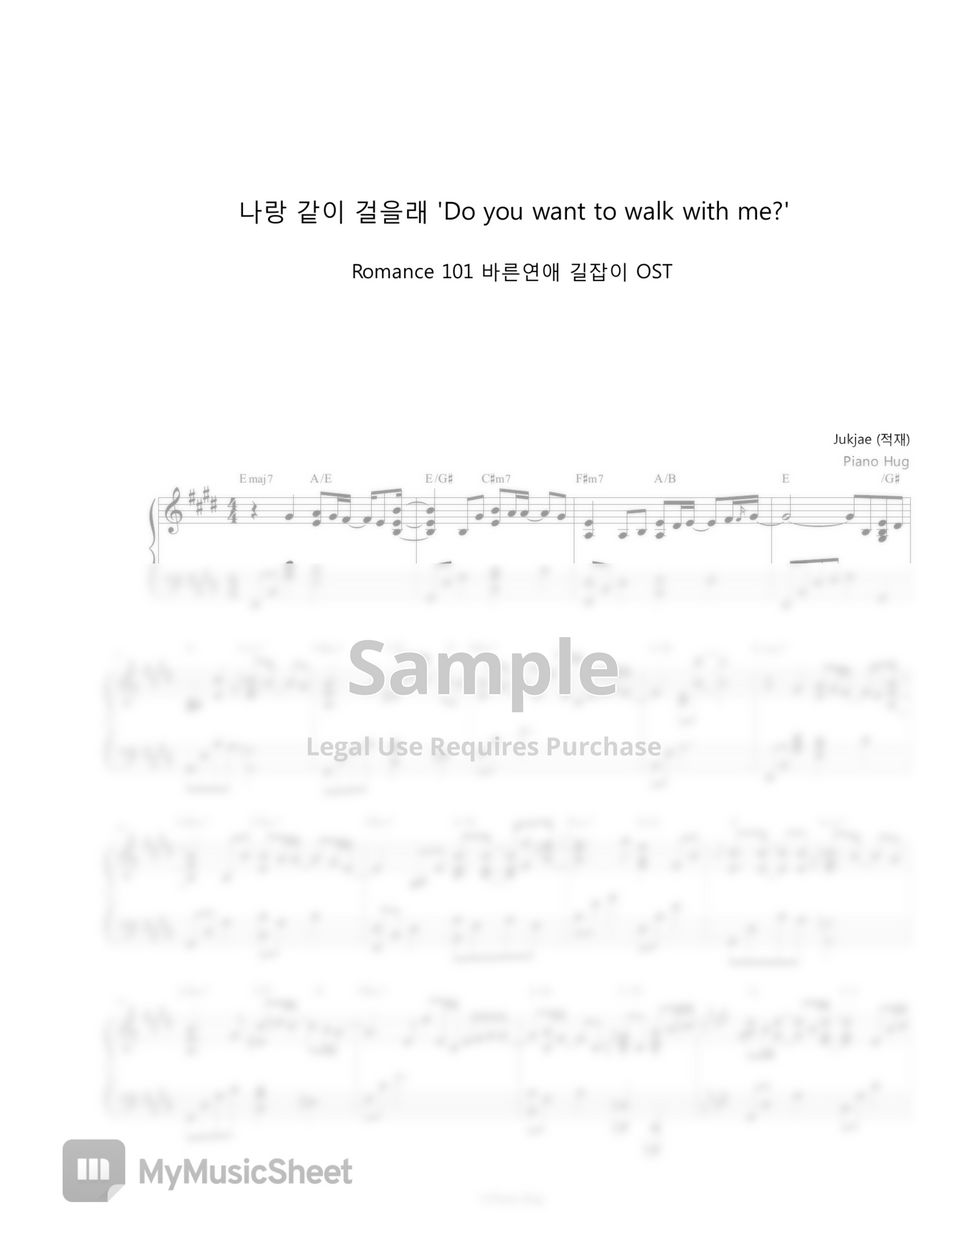 Jukjae (적재) - Do you want to walk with me? (Romance 101 바른연애 길잡이 OST) by Piano Hug